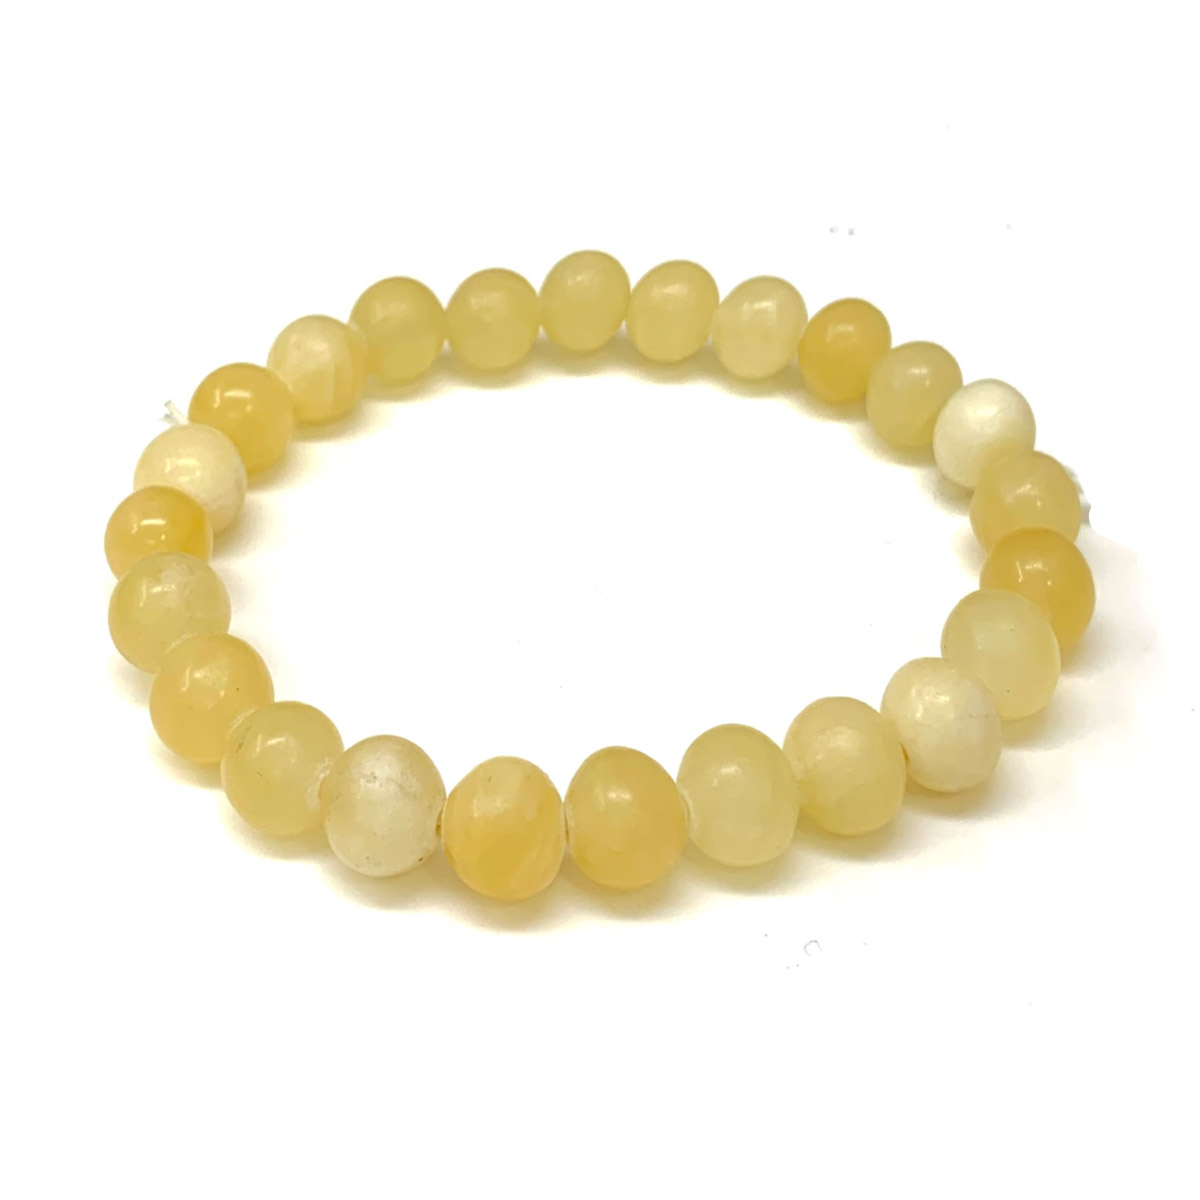 7 Inch Yellow Calcite Energy Healing Beads Stretch Bracelet